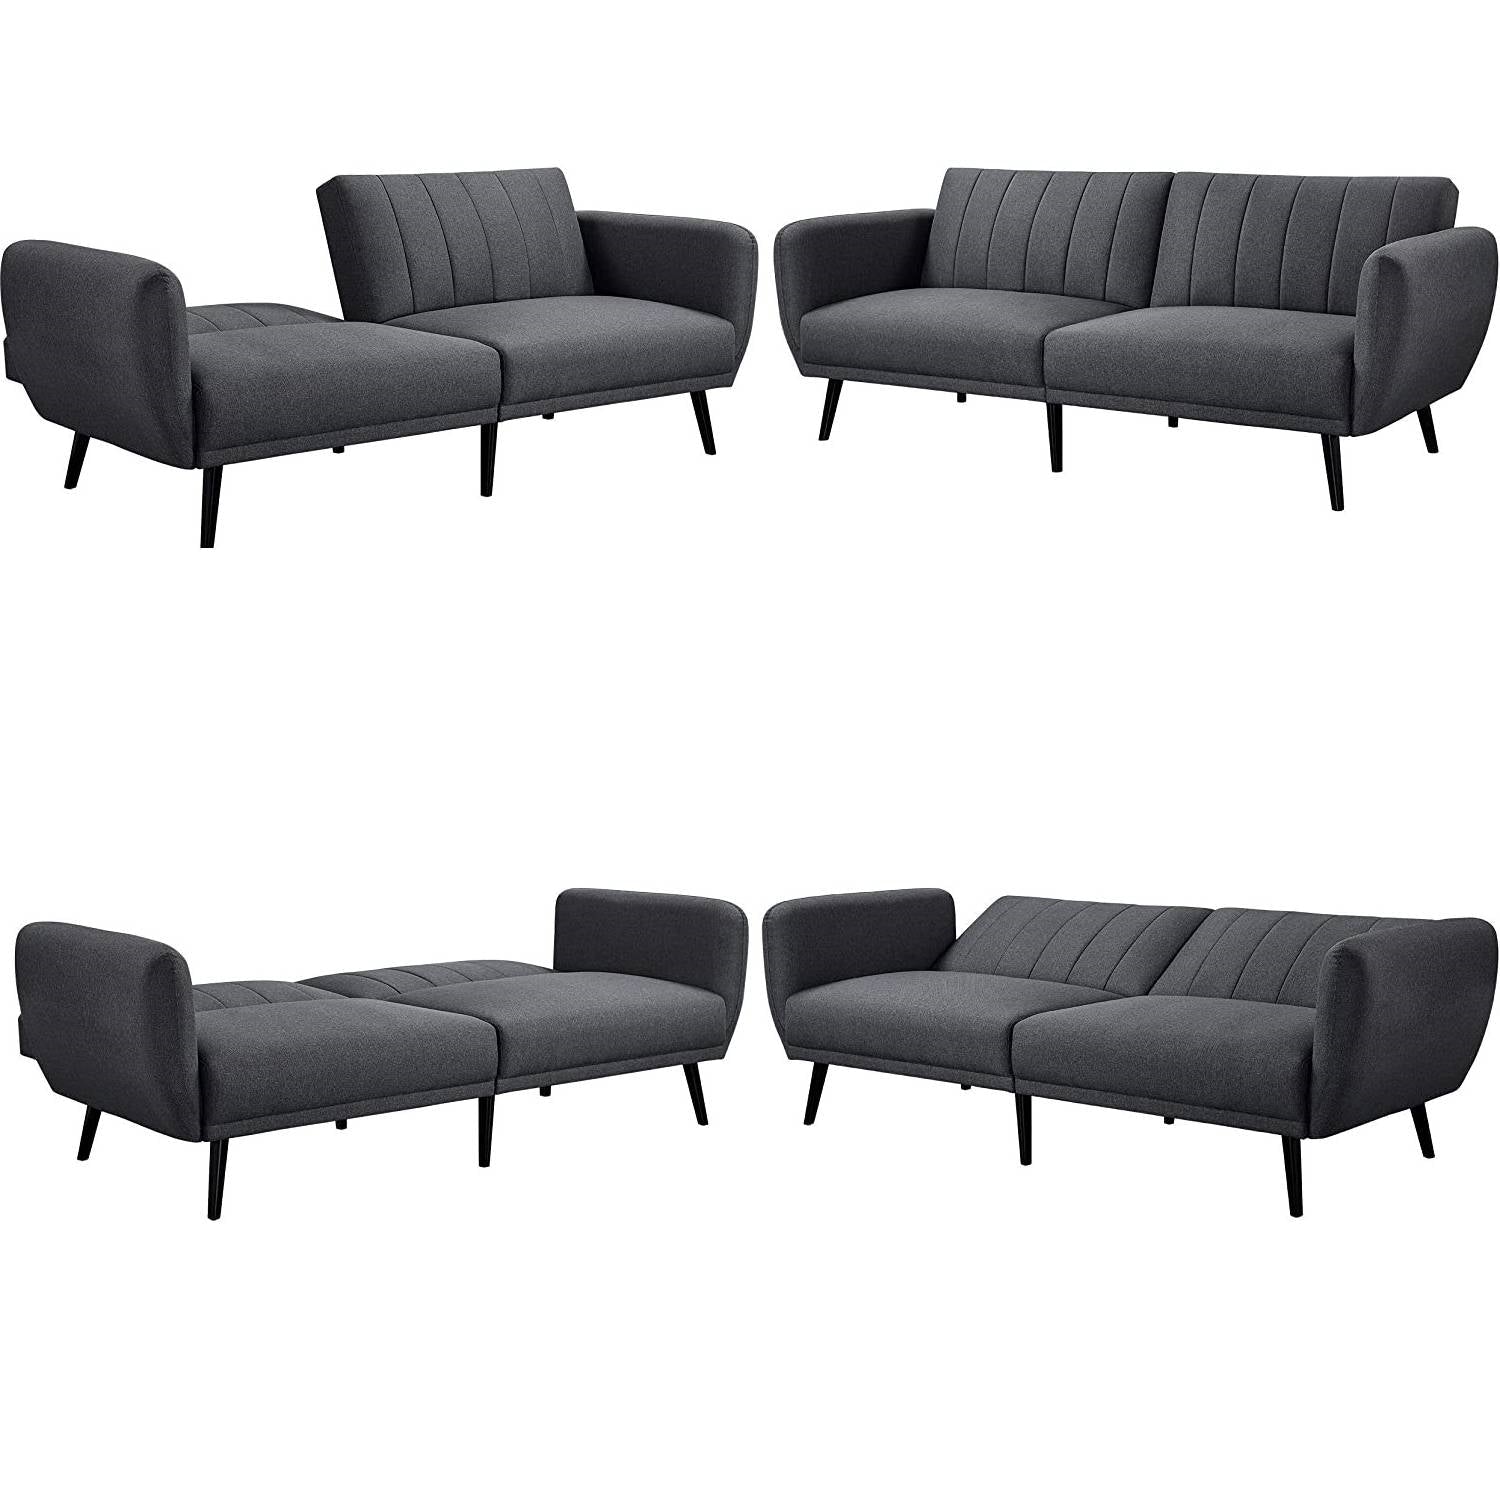 Living Room > Sofas - Modern Scandinavian Dark Grey Linen Upholstered Sofa Bed With Wooden Legs